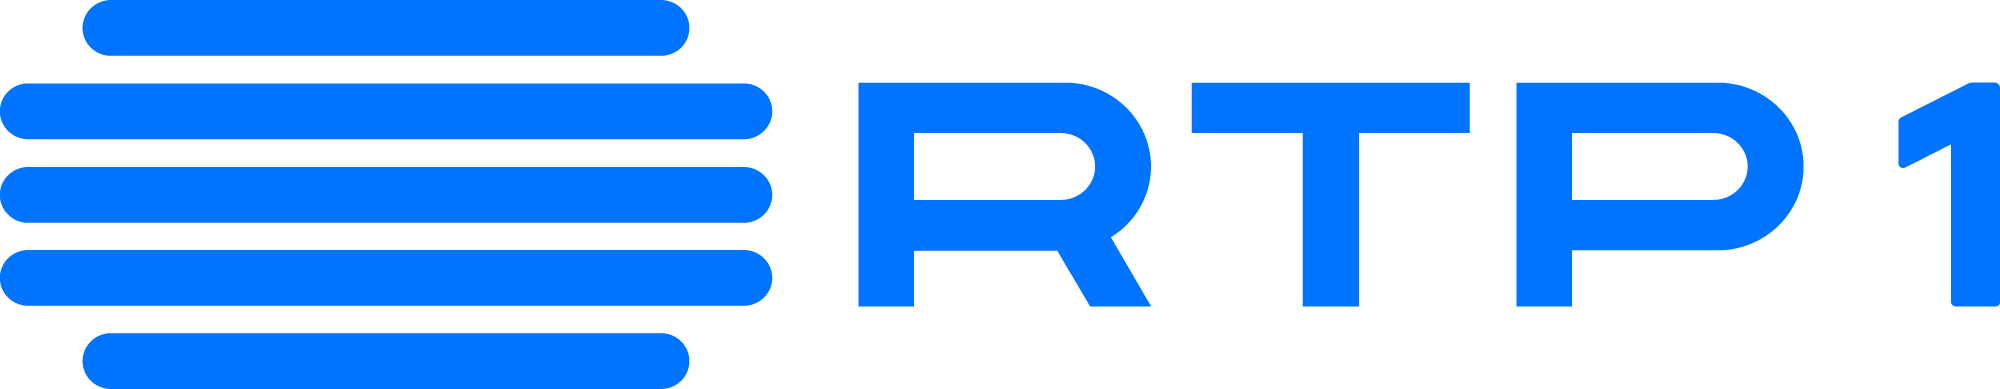 Rtp Internacional Logo Png / Navistar international Logos / Rtp1 rtp2